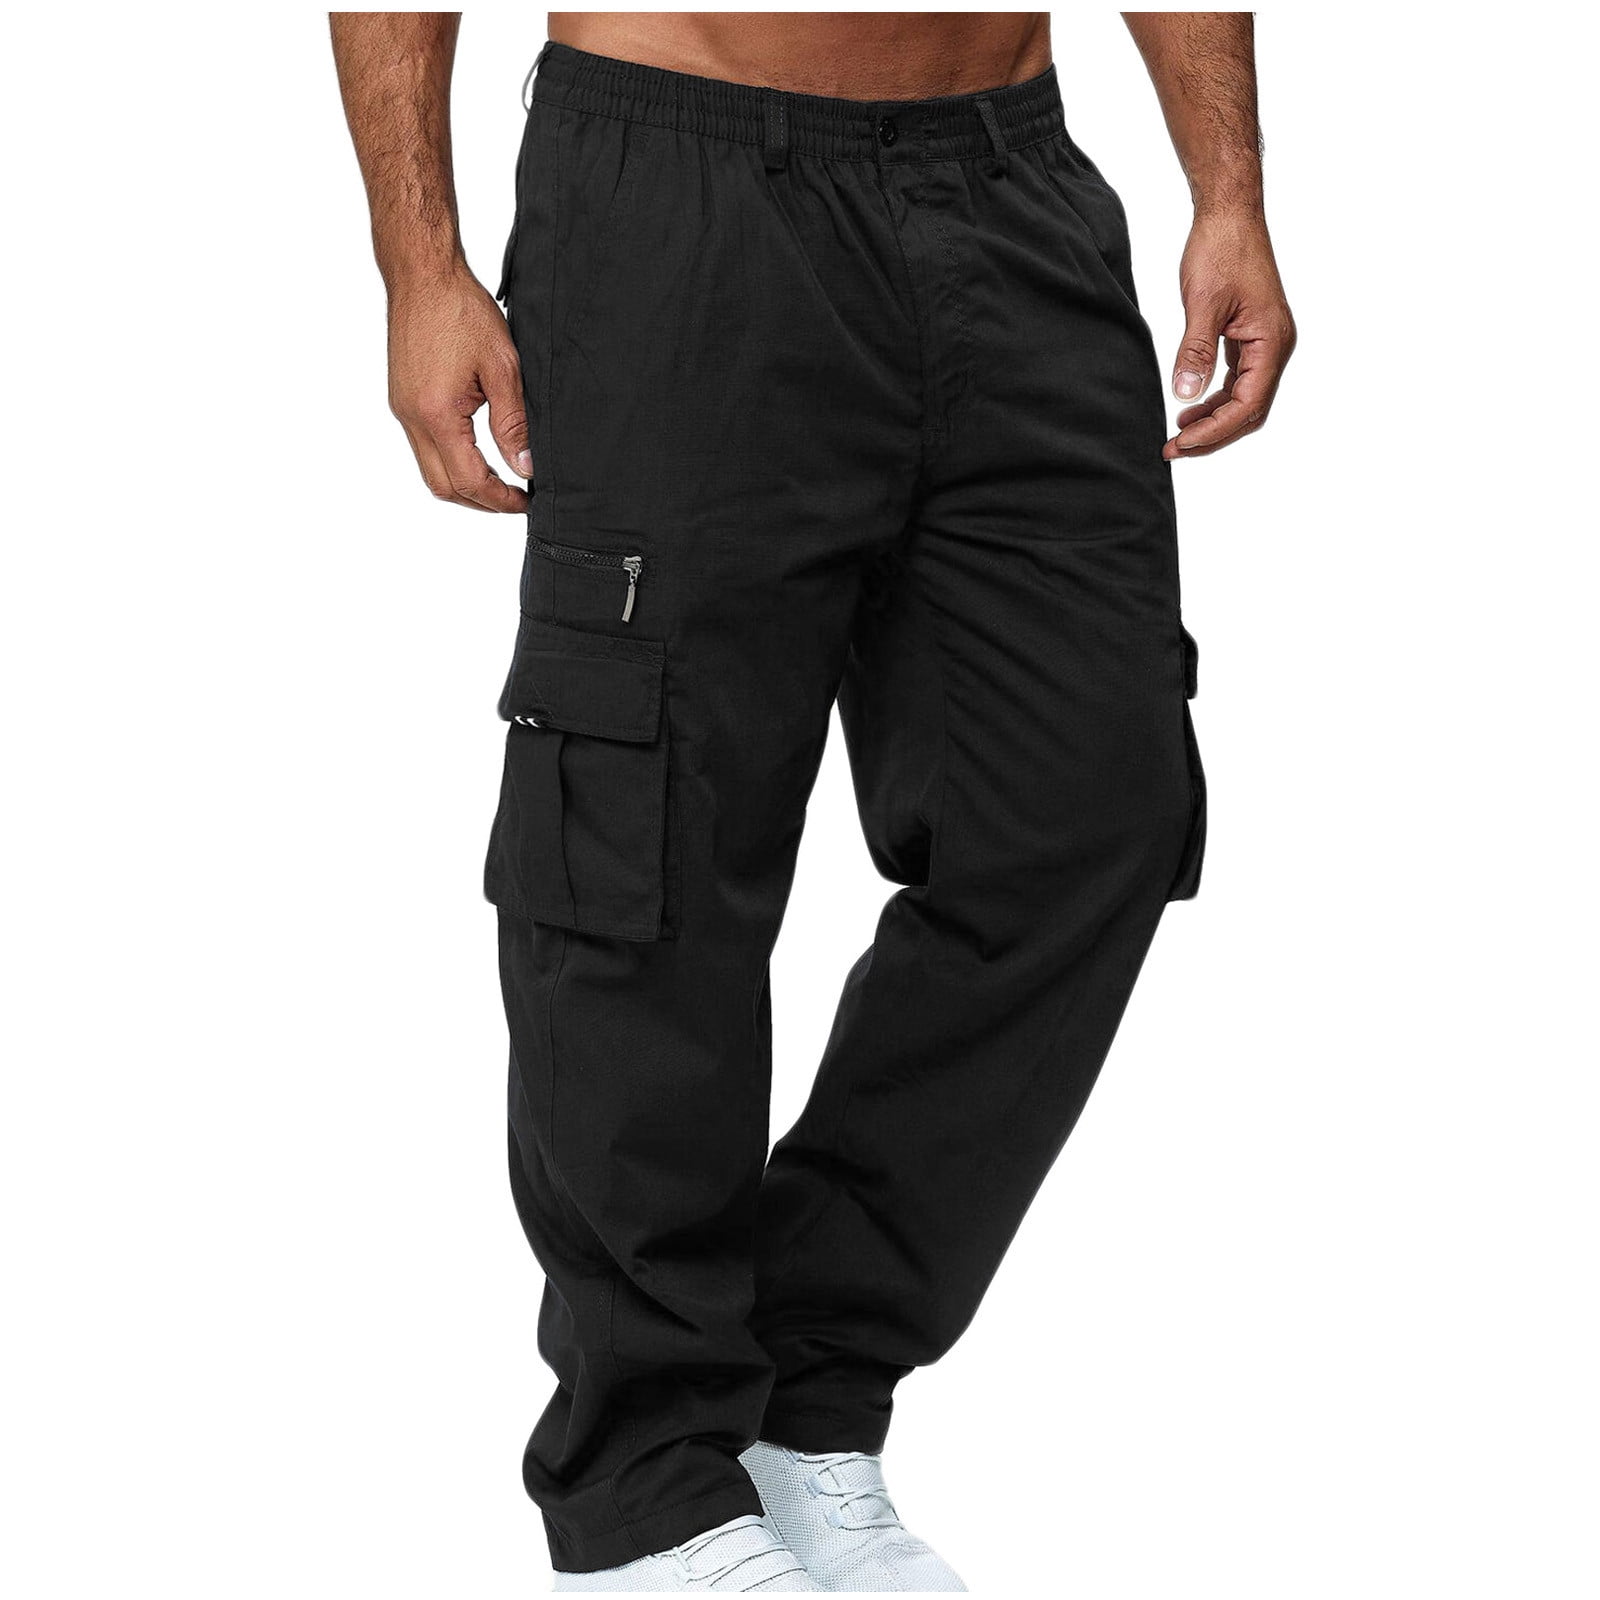 5.11 Tactical® Cotton Canvas Pant for Men - Ultimate Comfort & Durability |  5.11® Tactical Official Site